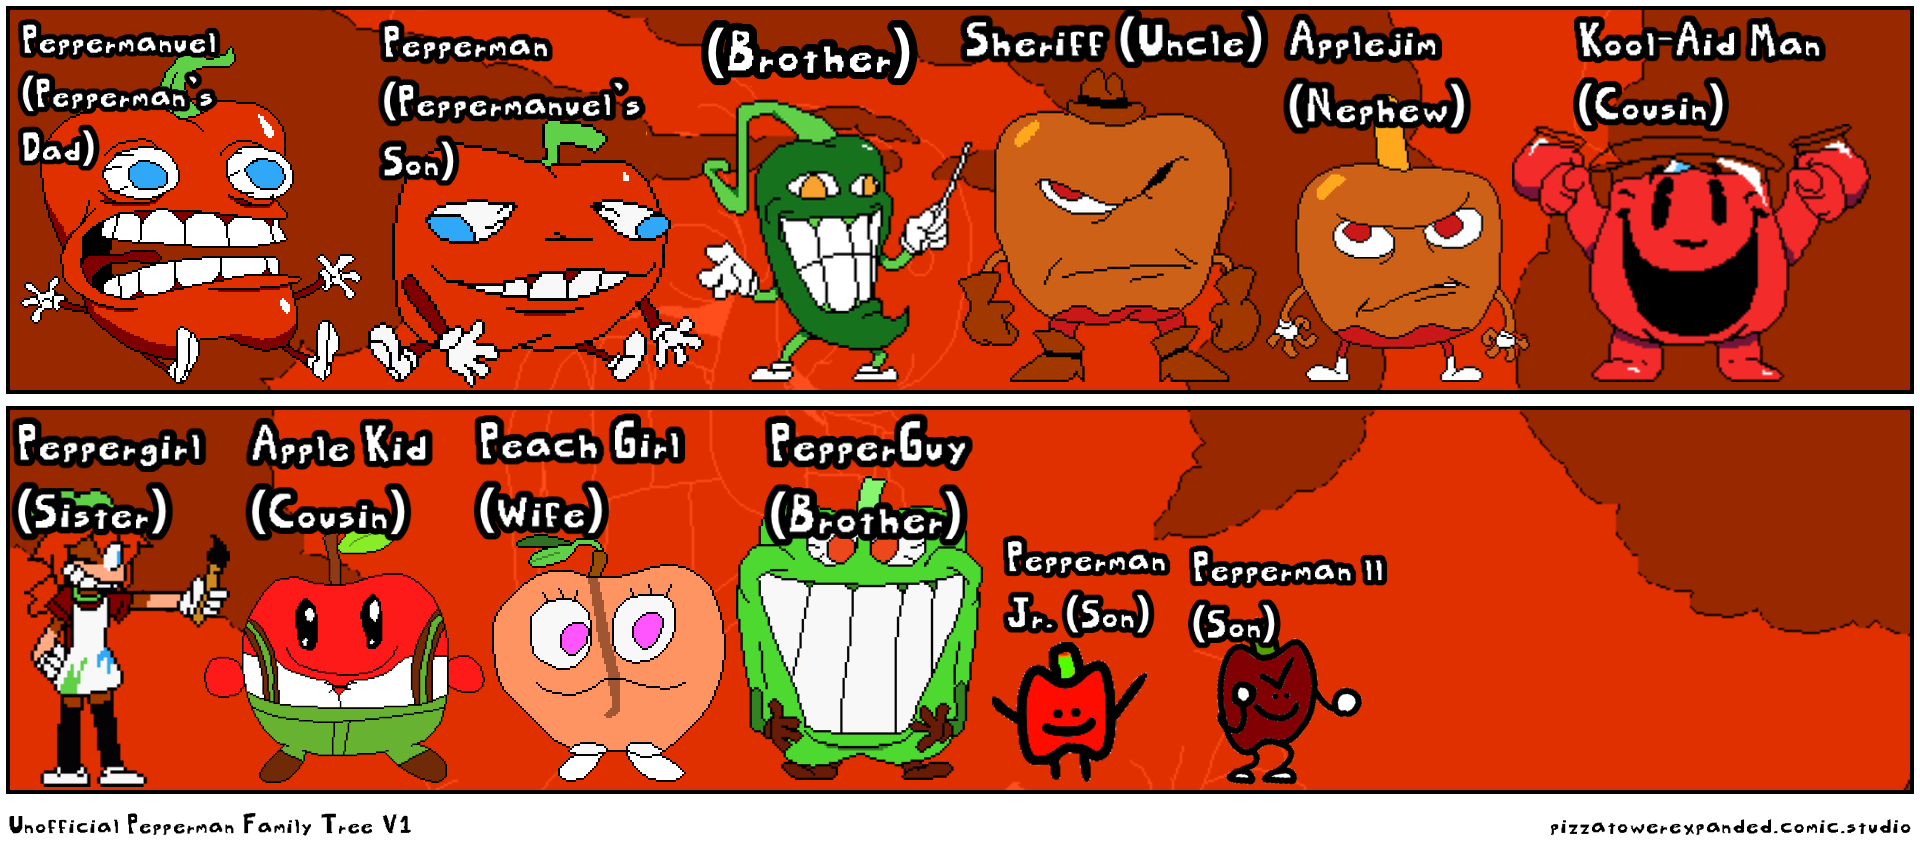 Unofficial Pepperman Family Tree V1